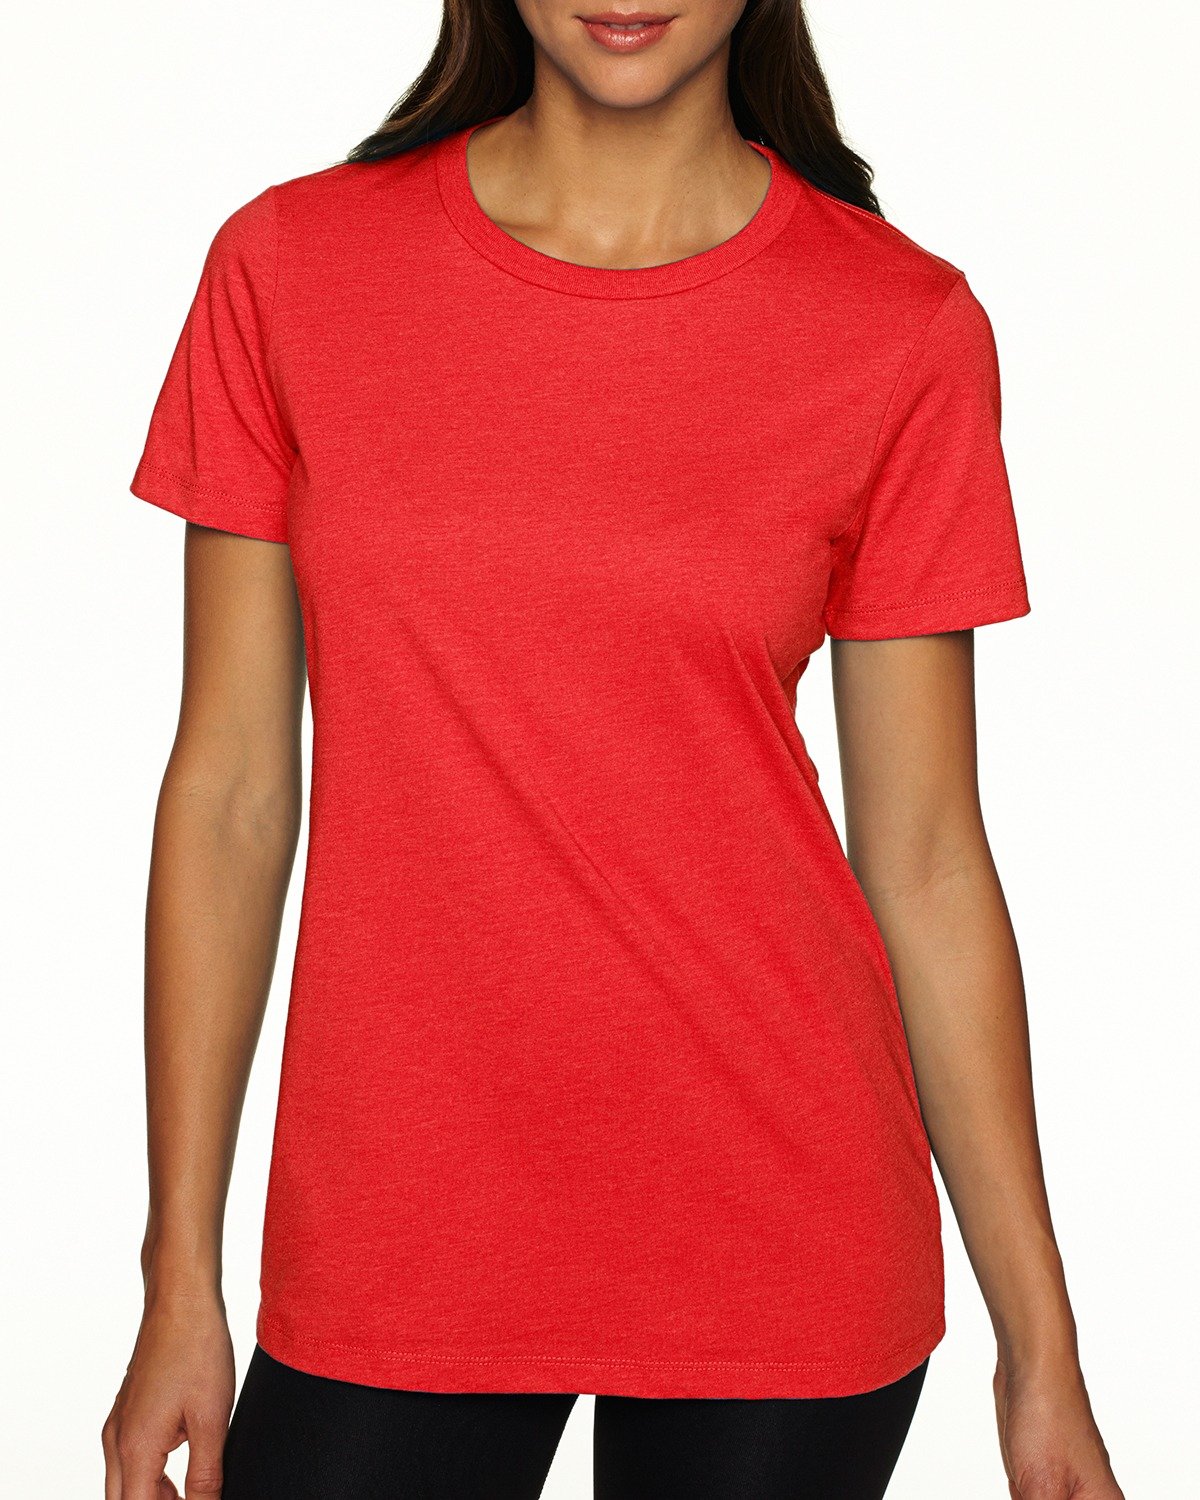 Next Level Ladies' CVC T-Shirt RED 